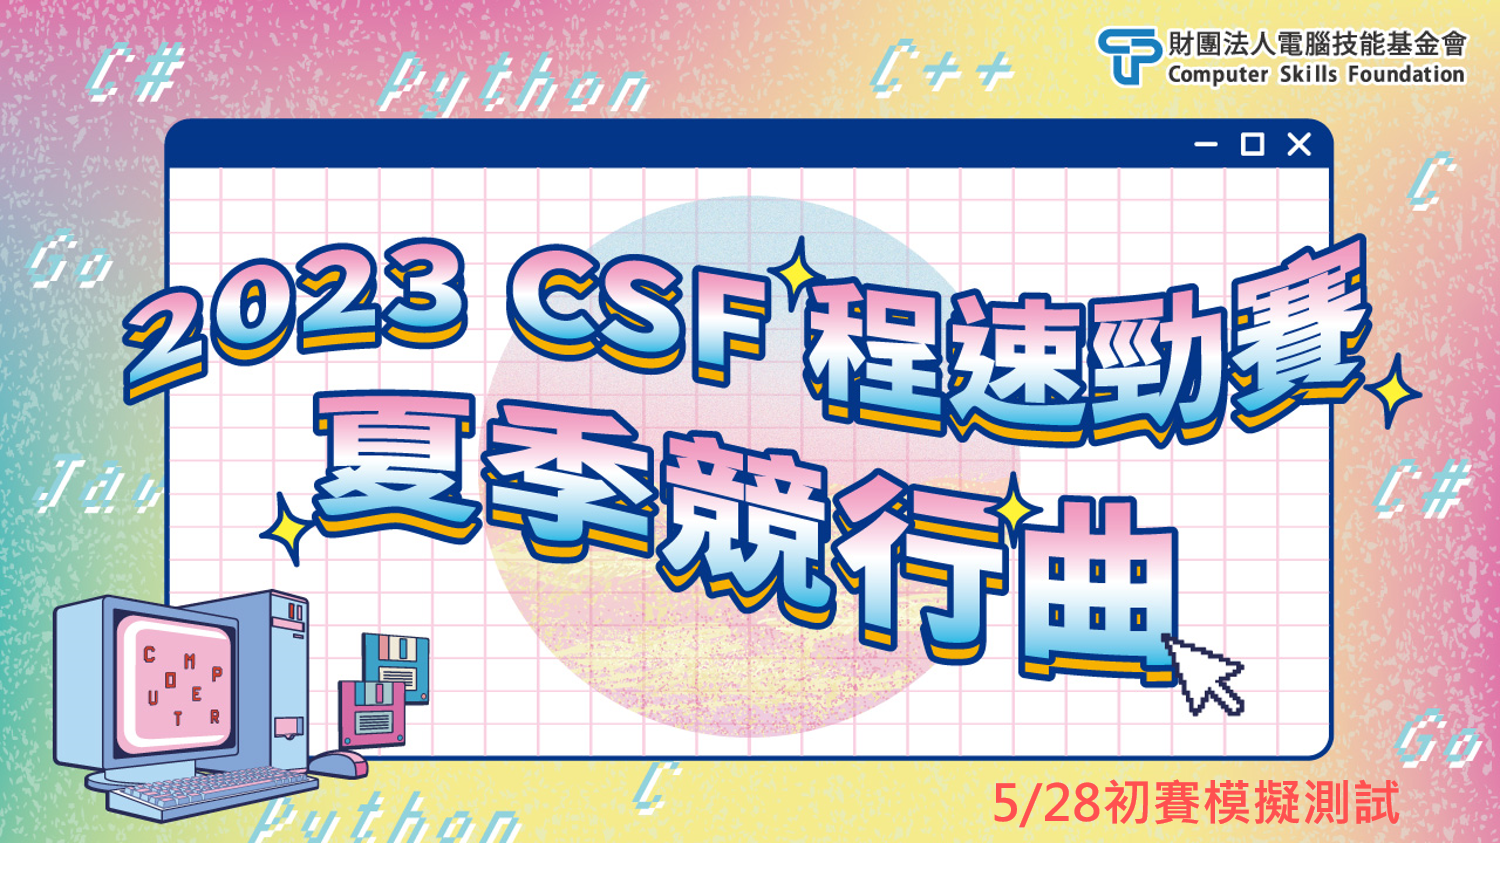 2023 CSF程速勁賽-Python夏季競行曲-5/28初賽當天開放模擬測試